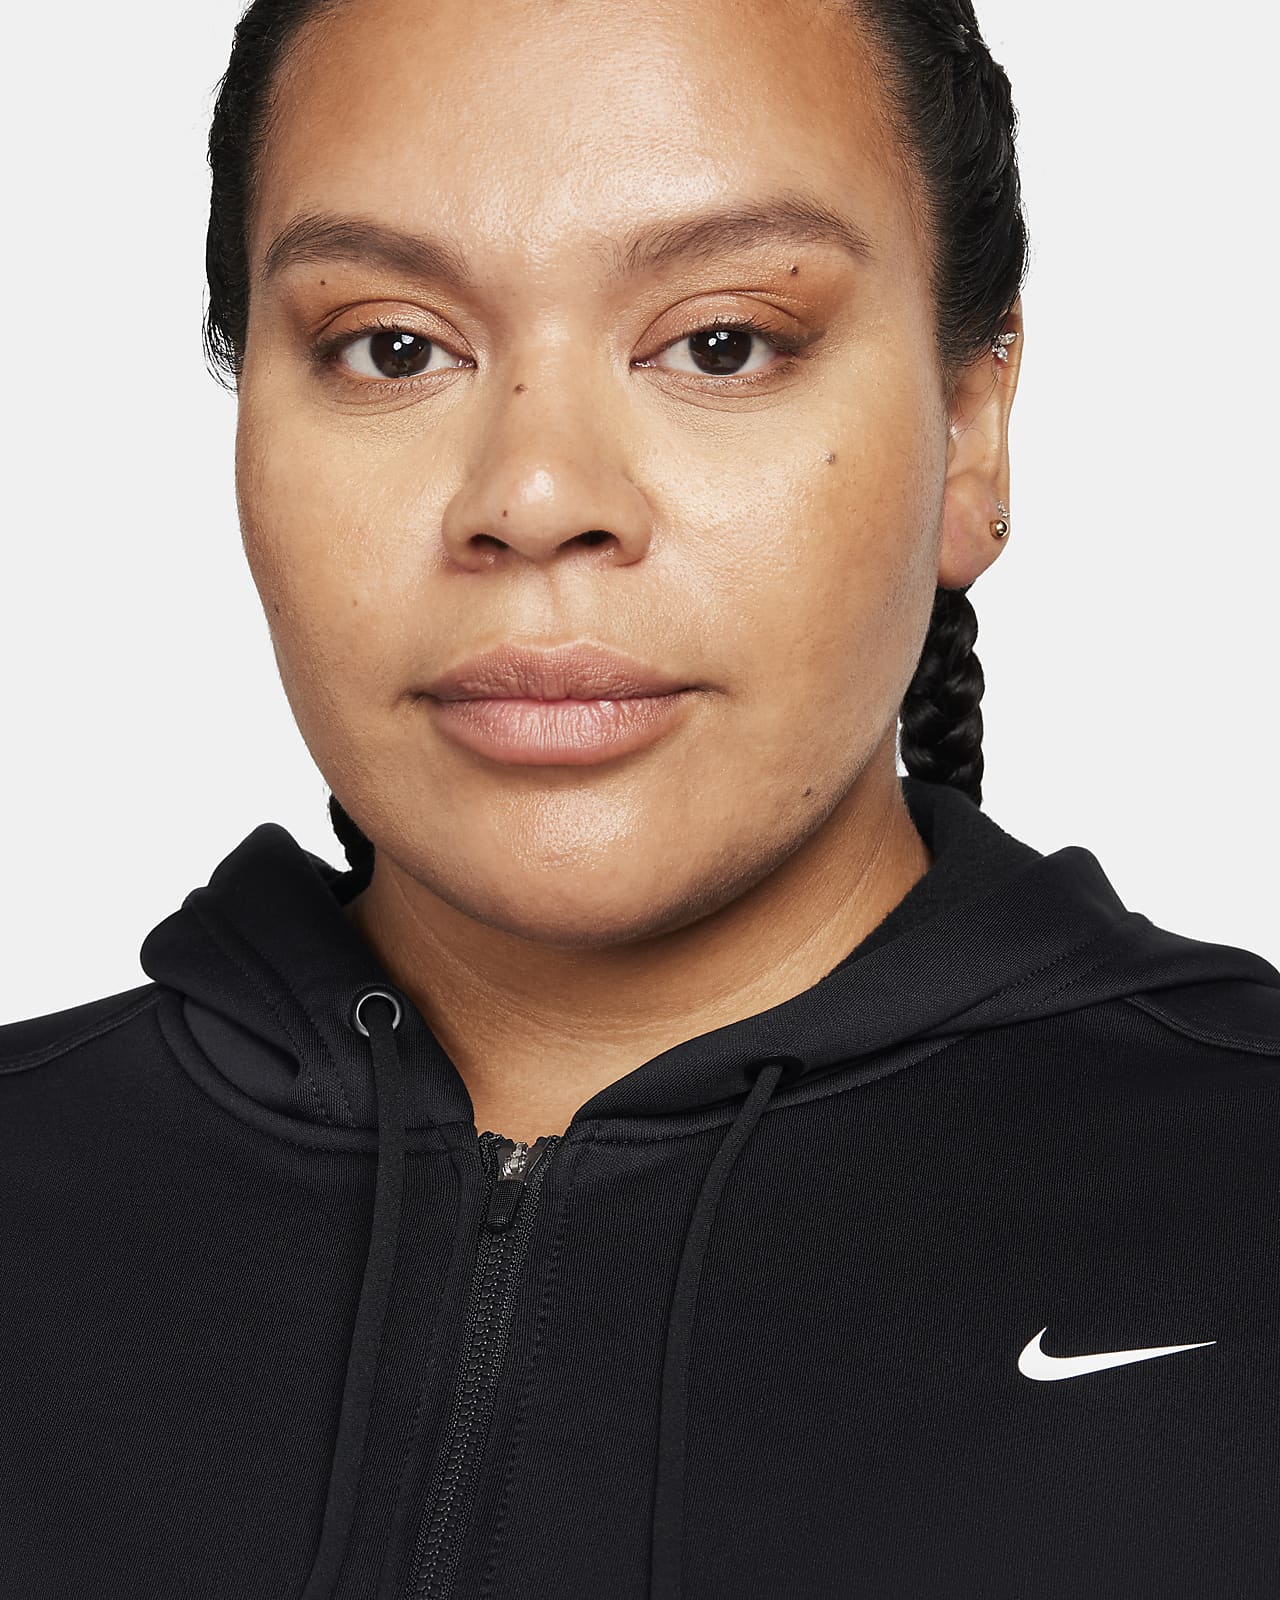 Nike Therma-FIT One Women's Full-Zip Hoodie (Plus Size)